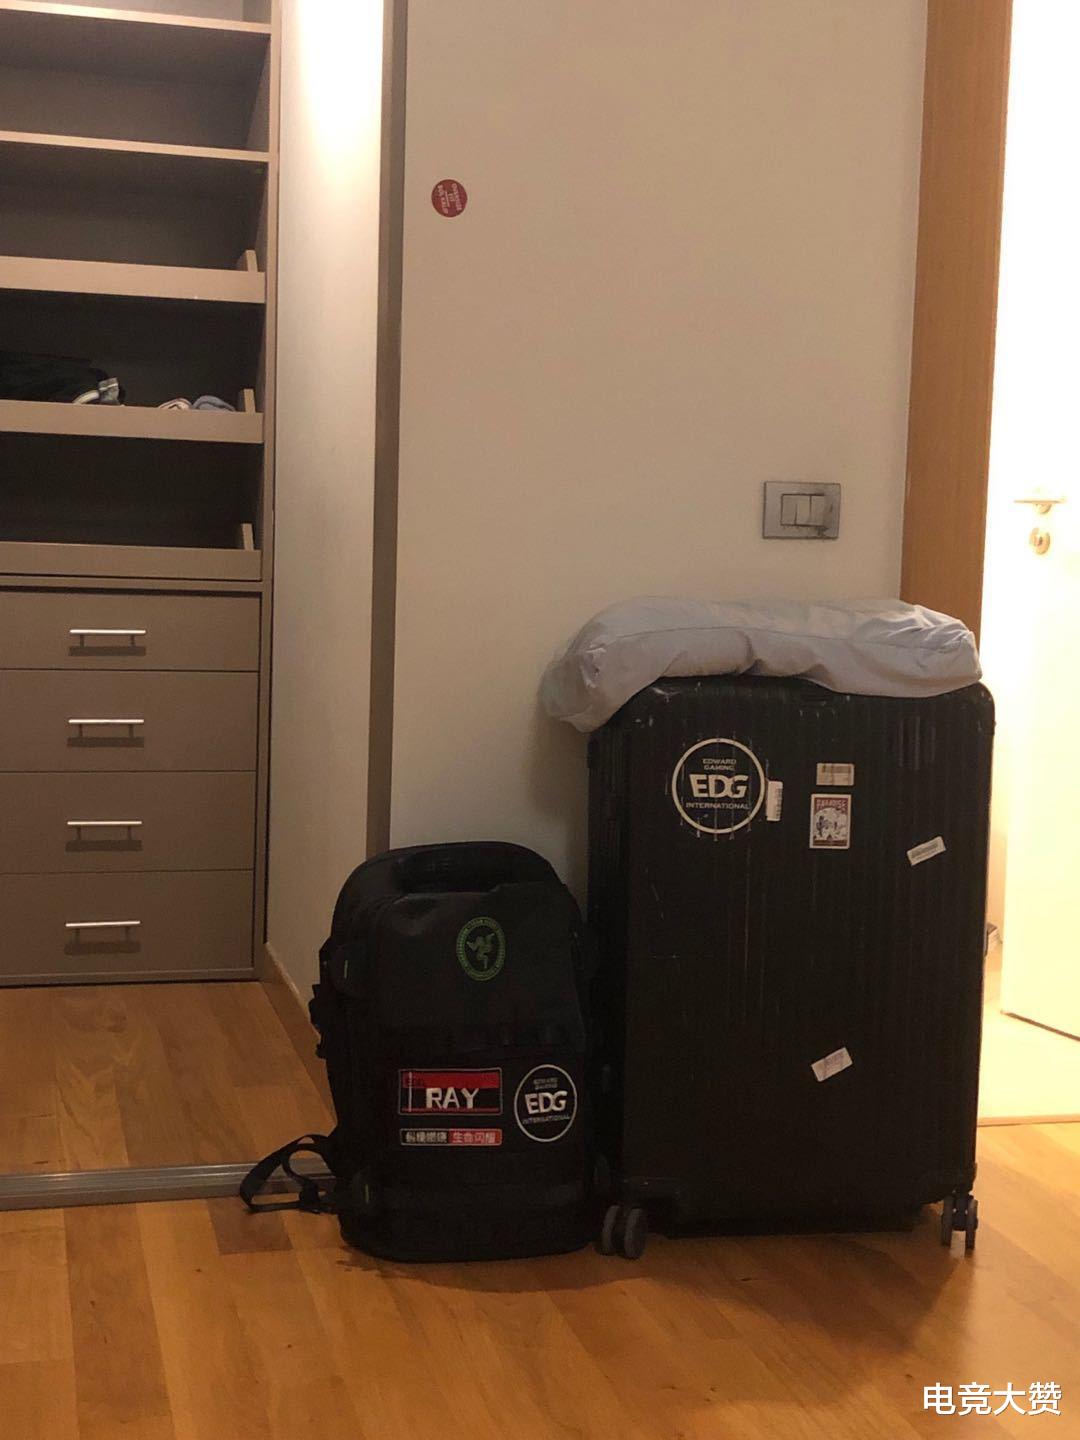 EDG前上單Ray發文：離開土耳其，配圖的行李箱和包都是EDG的-圖2